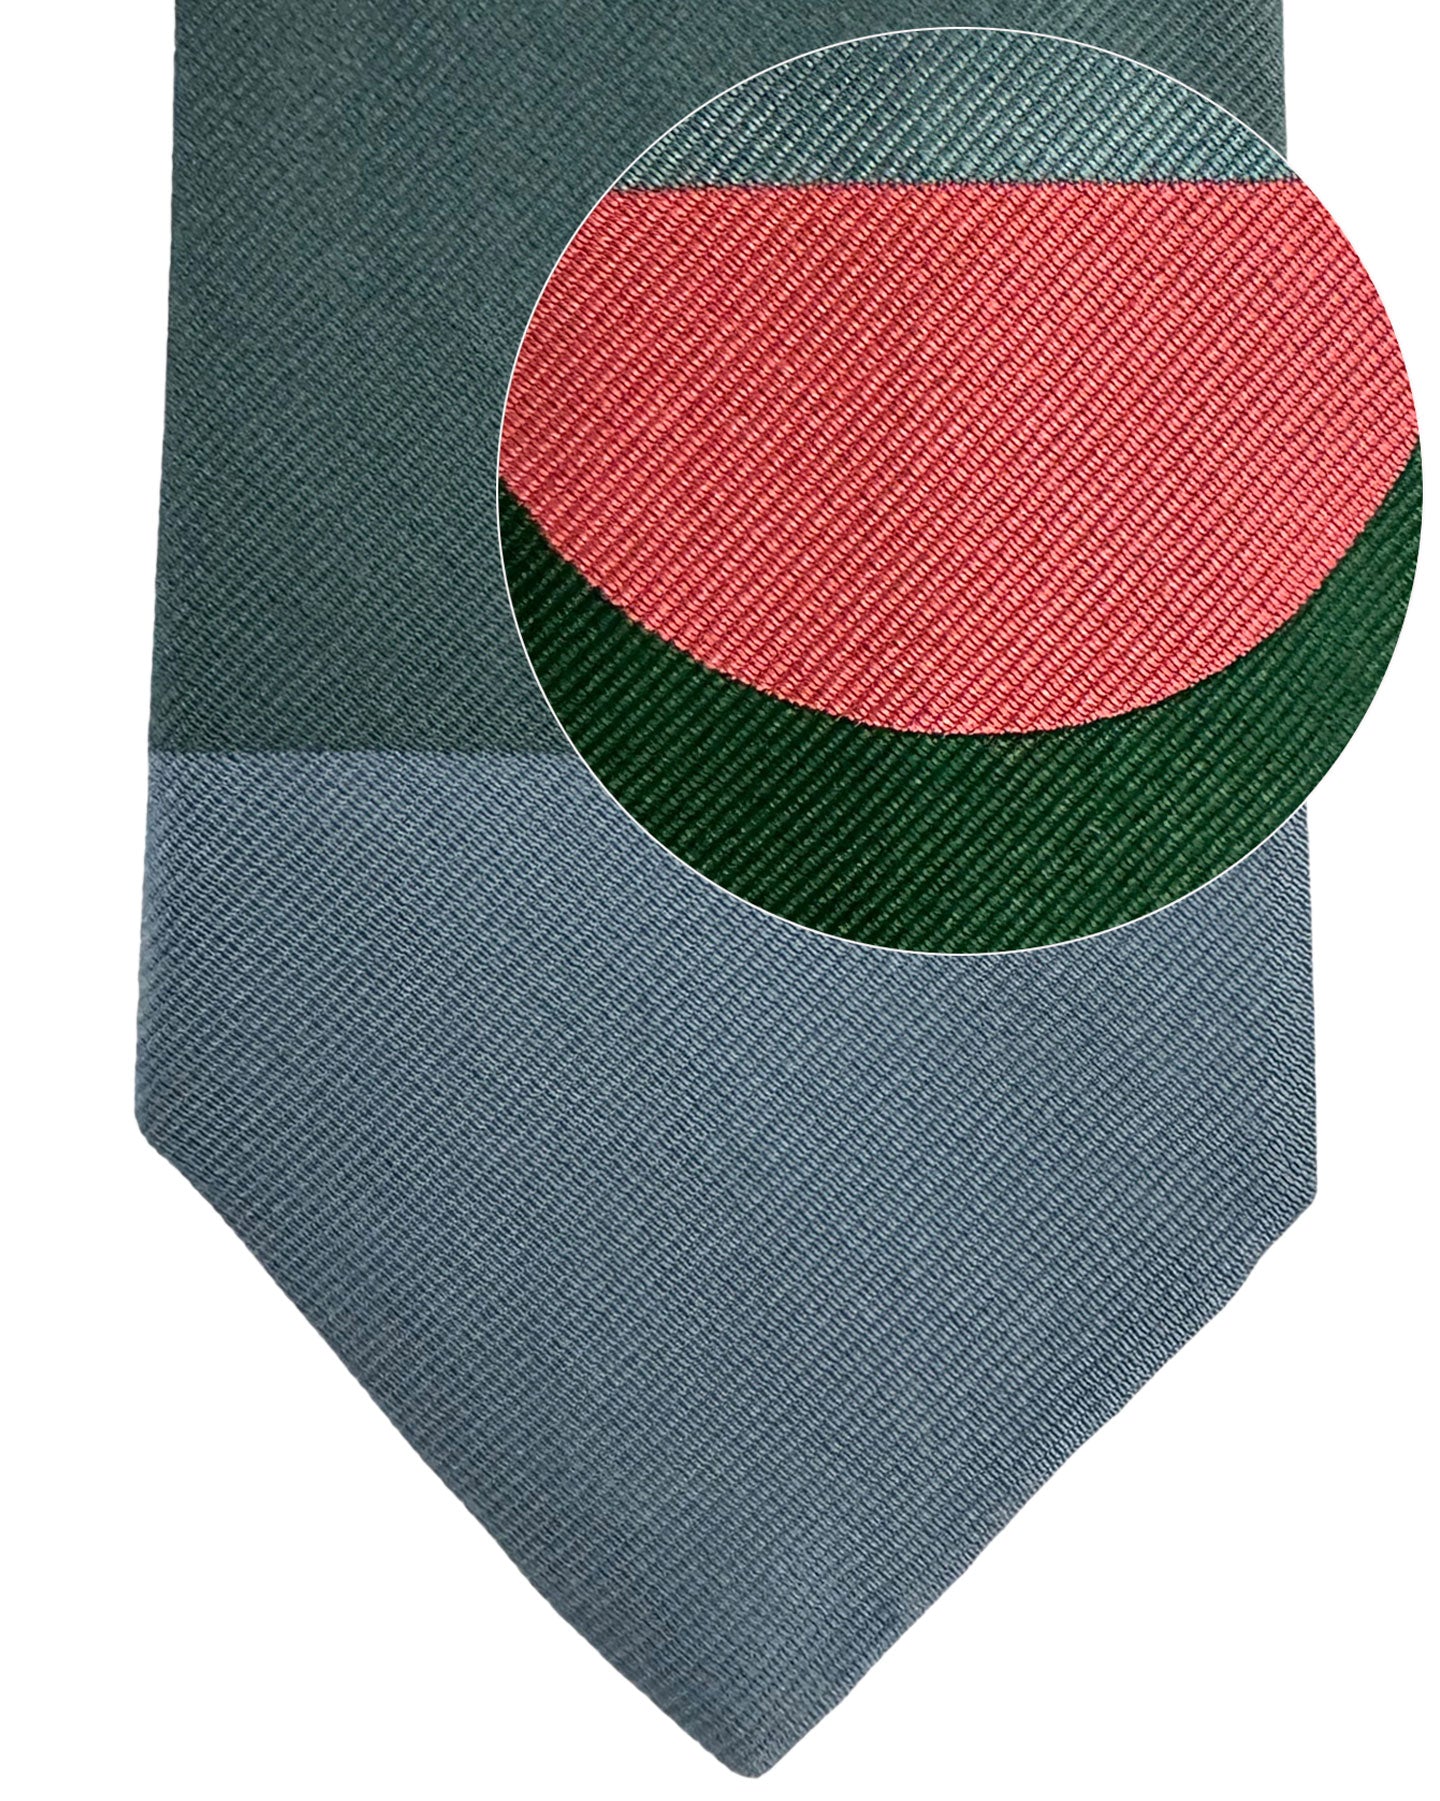 Gene Meyer Tie Gray Dark Green Pink Design - Hand Made in Italy